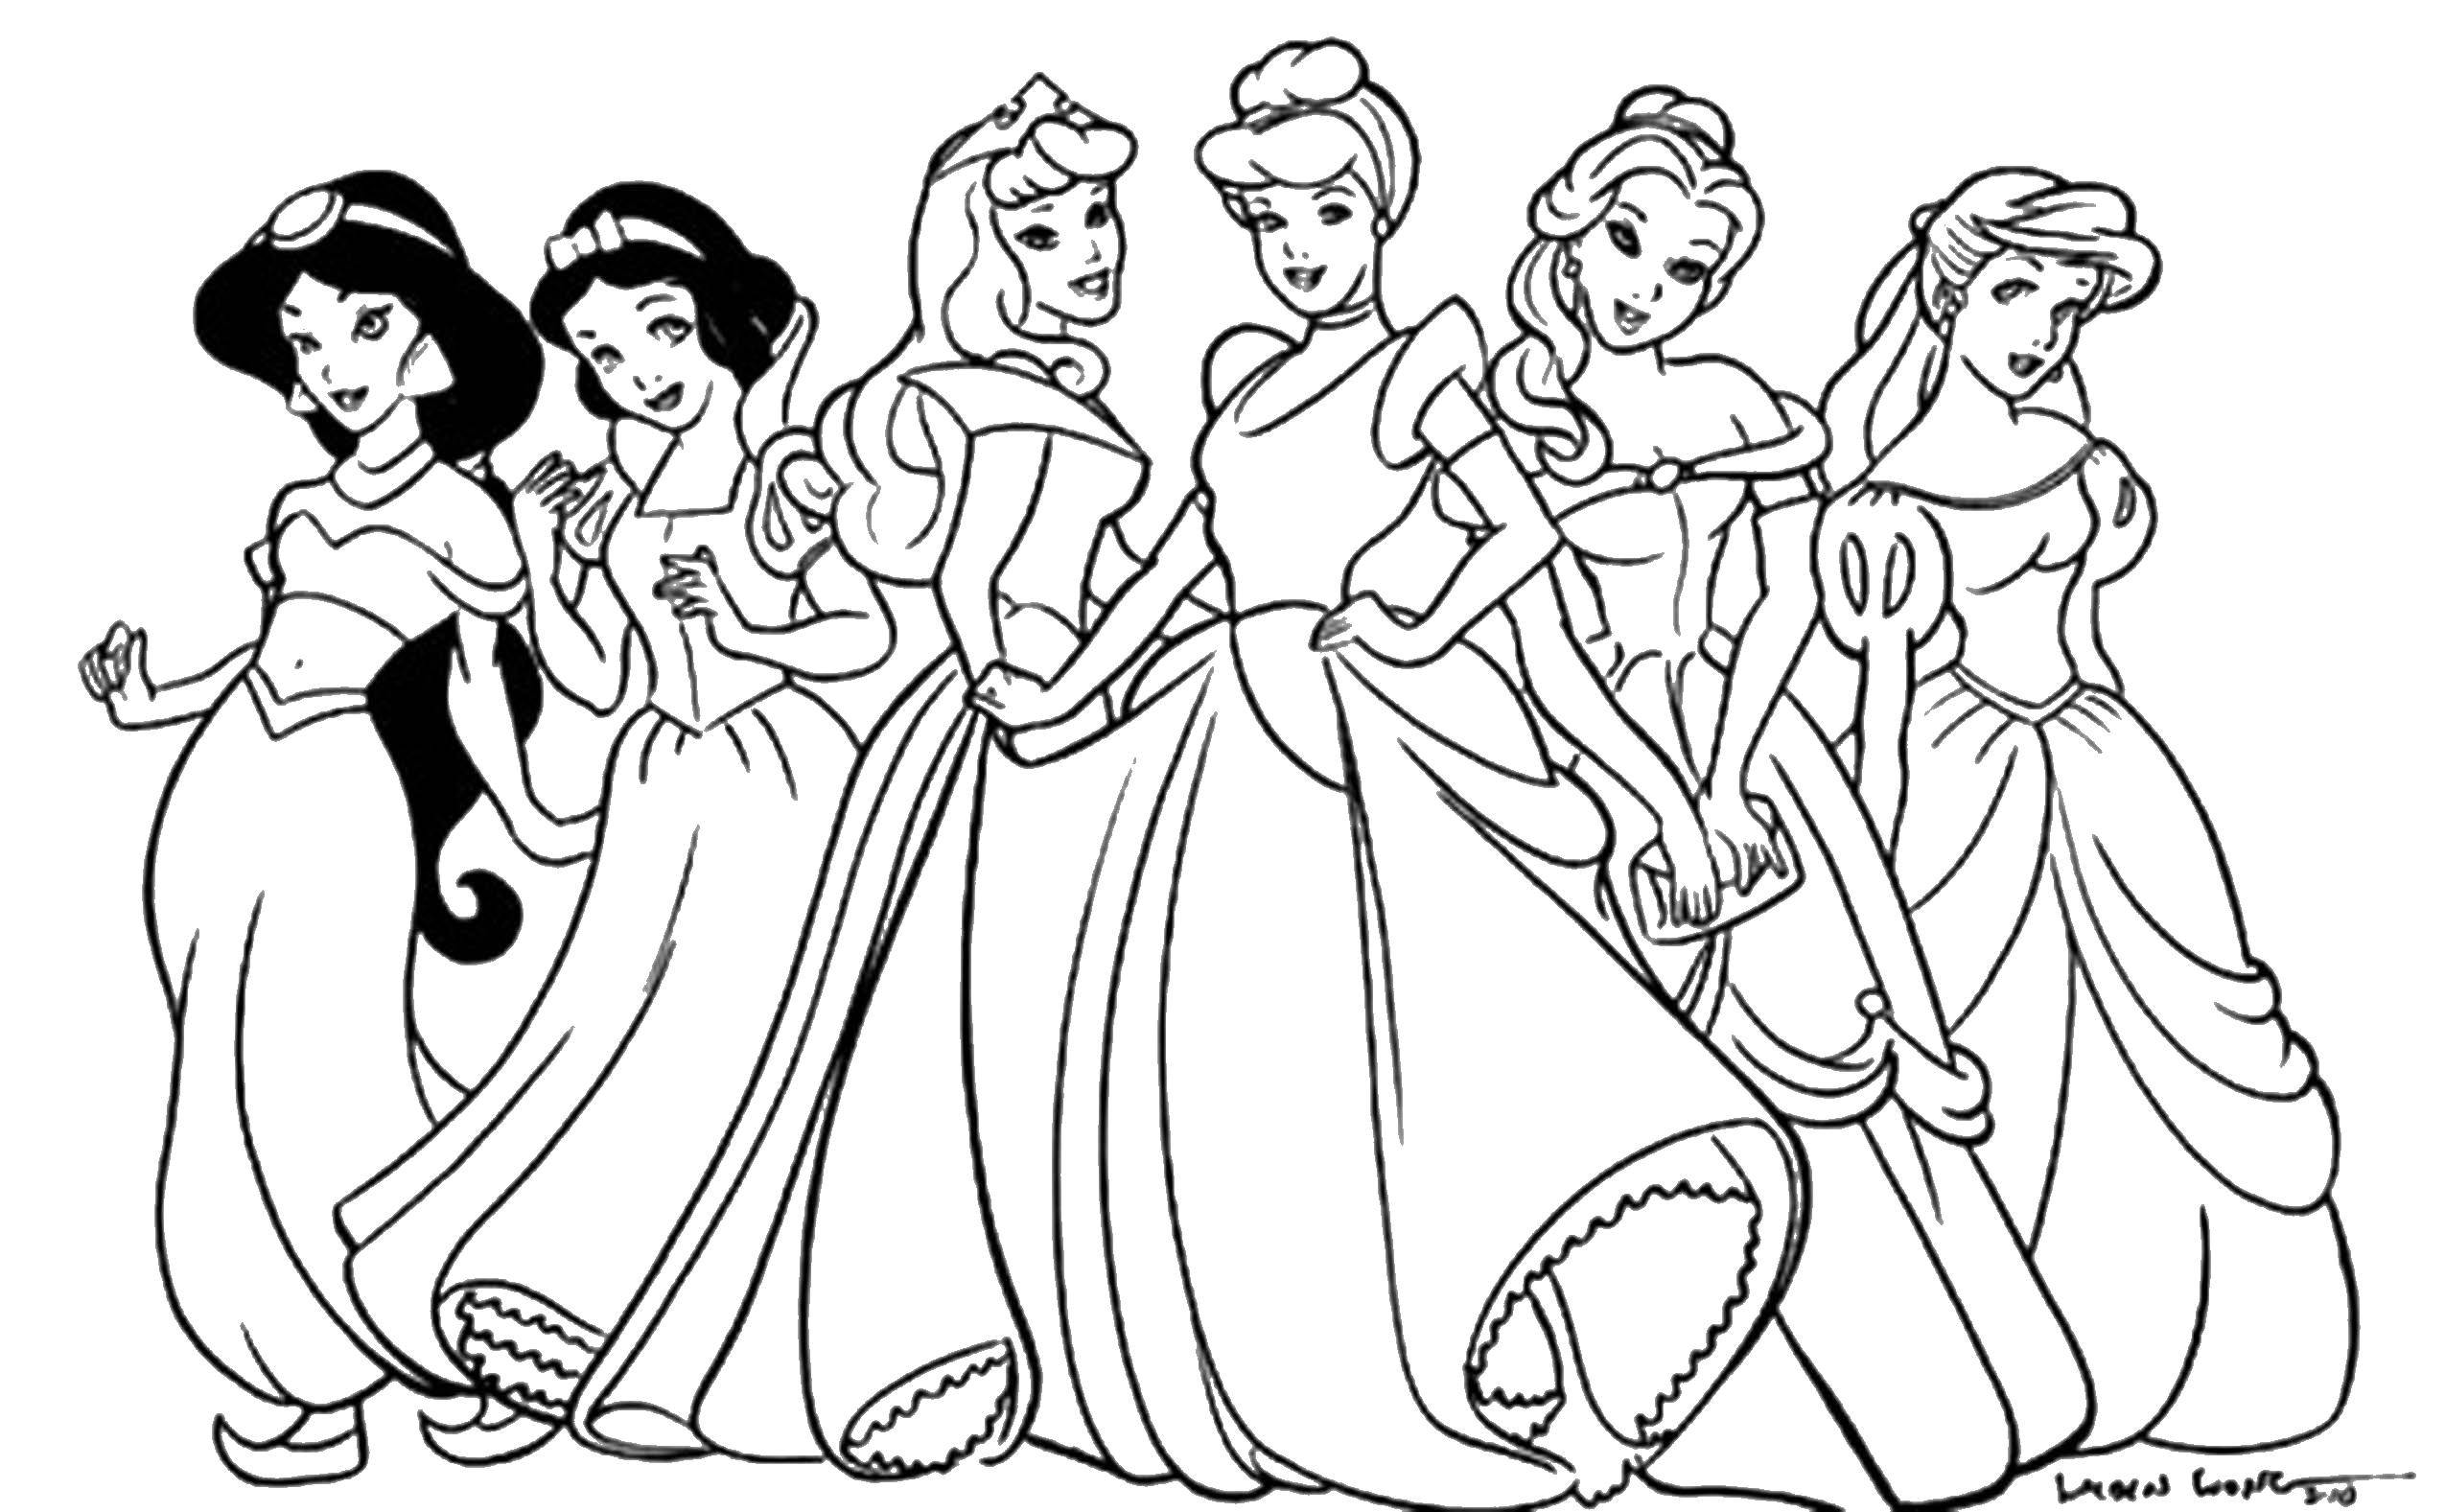 Coloring Beautiful Princess. Category Disney coloring pages. Tags:  Disney cartoons, princesses.